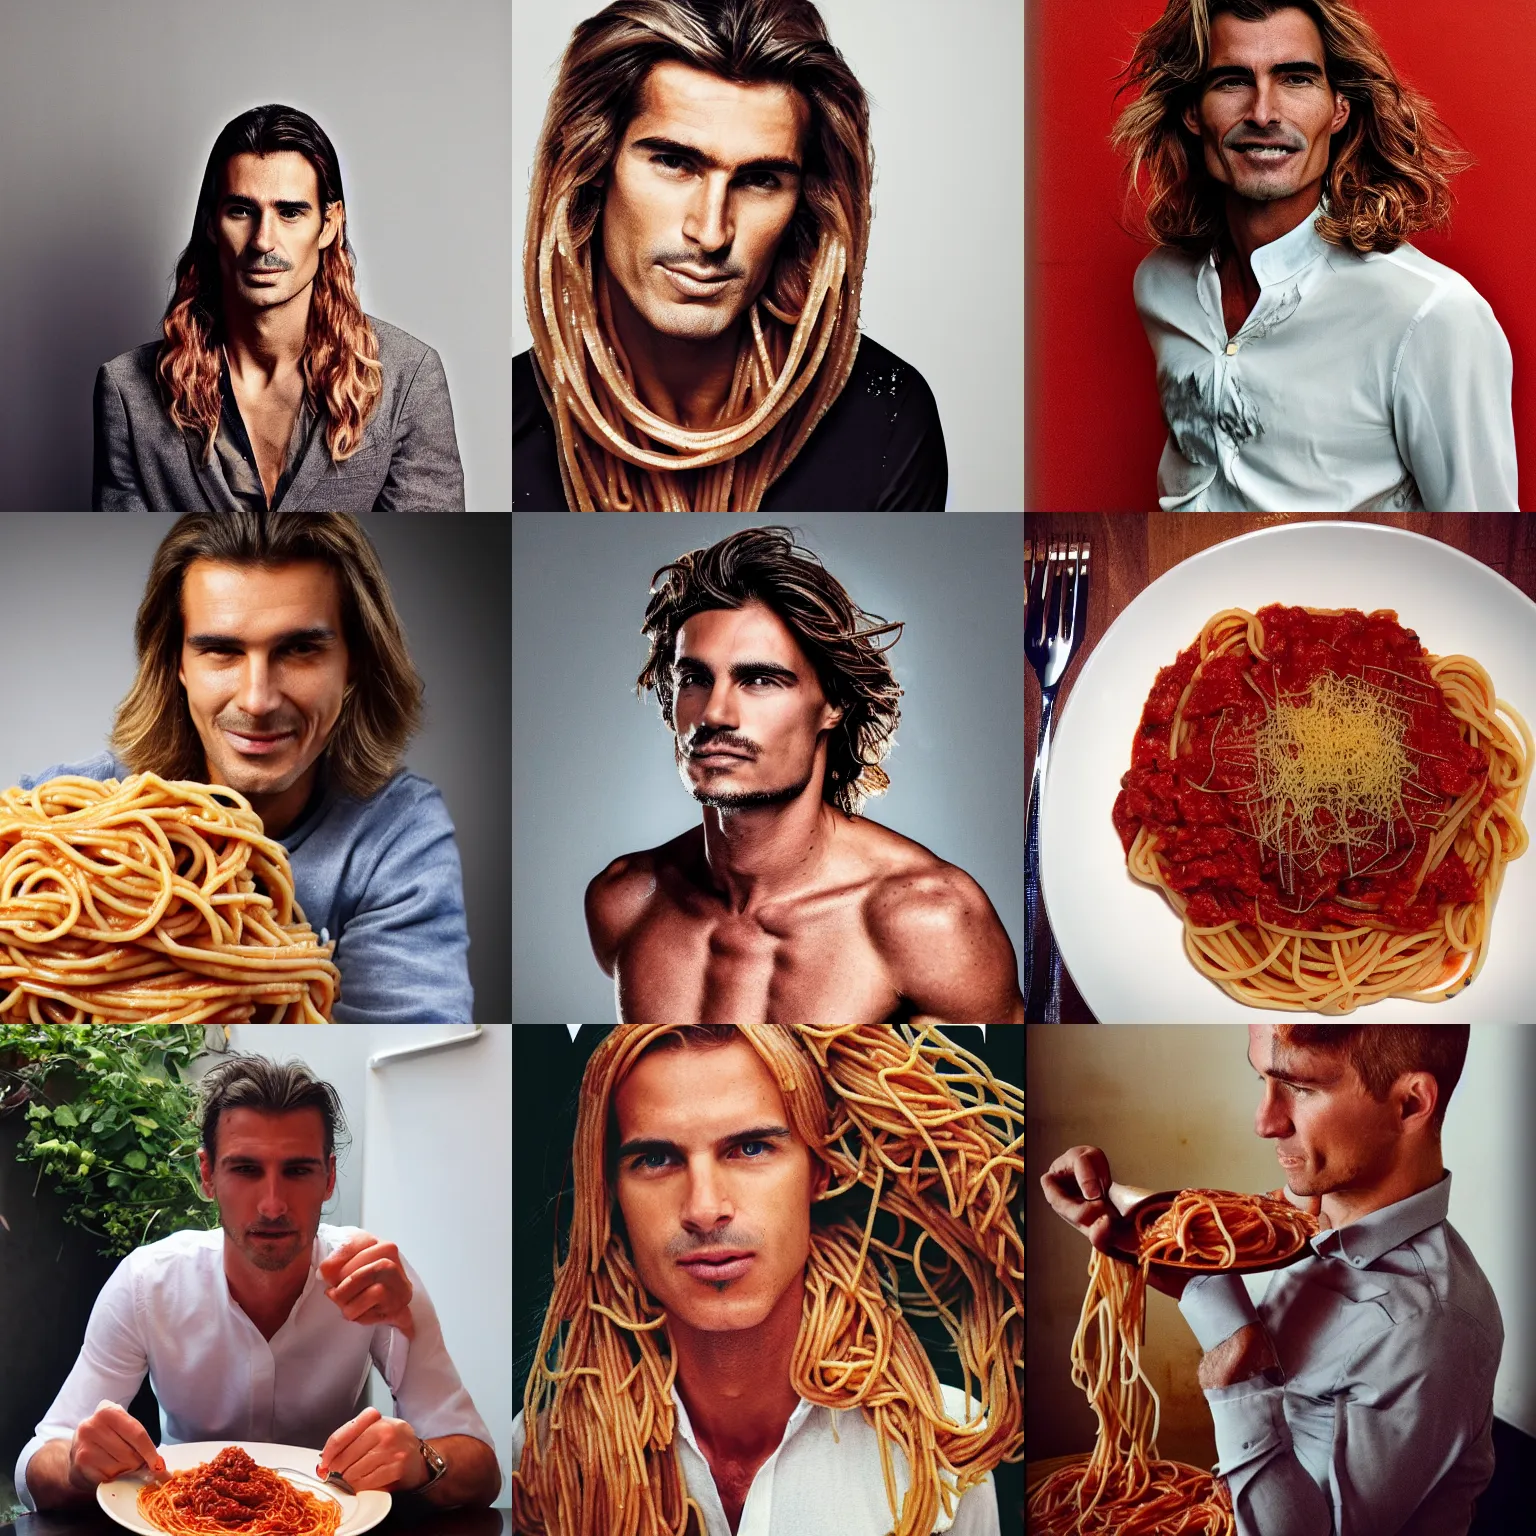 Prompt: fabio, delicious spaghetti bolognesa instead of hair, vogue, award winning photo